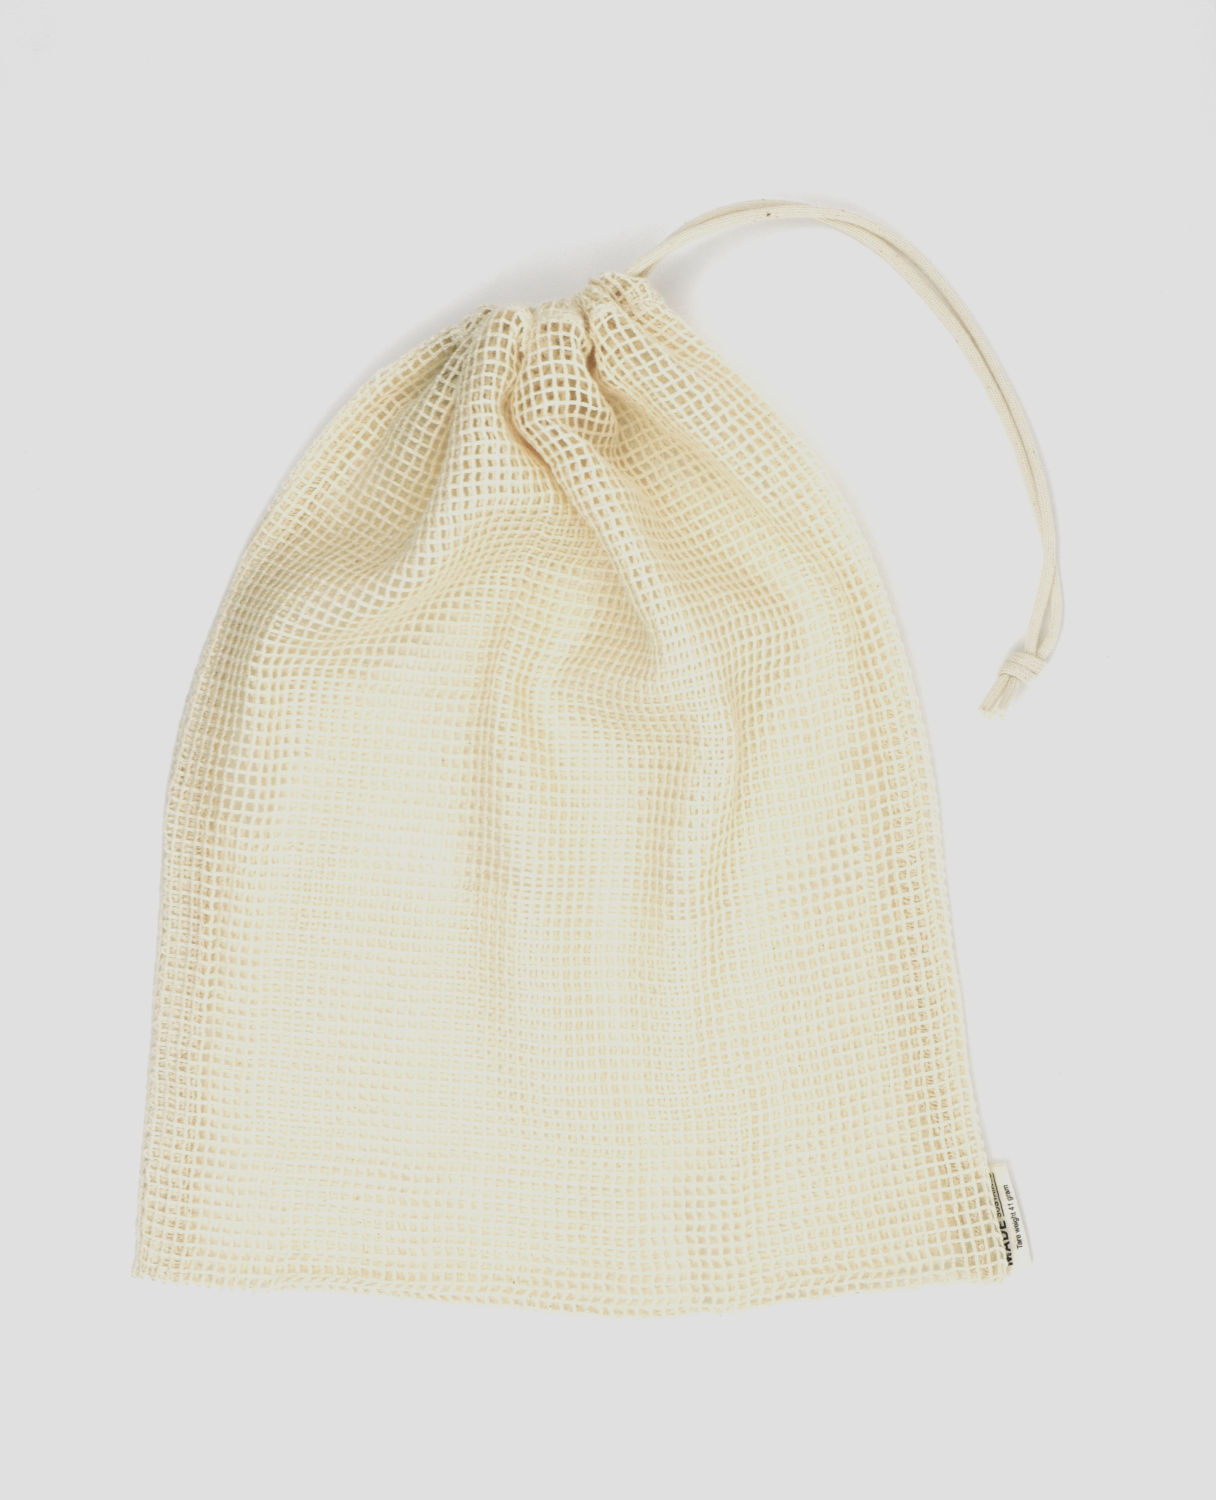 Re-Sack - organic cotton shopping bag and net